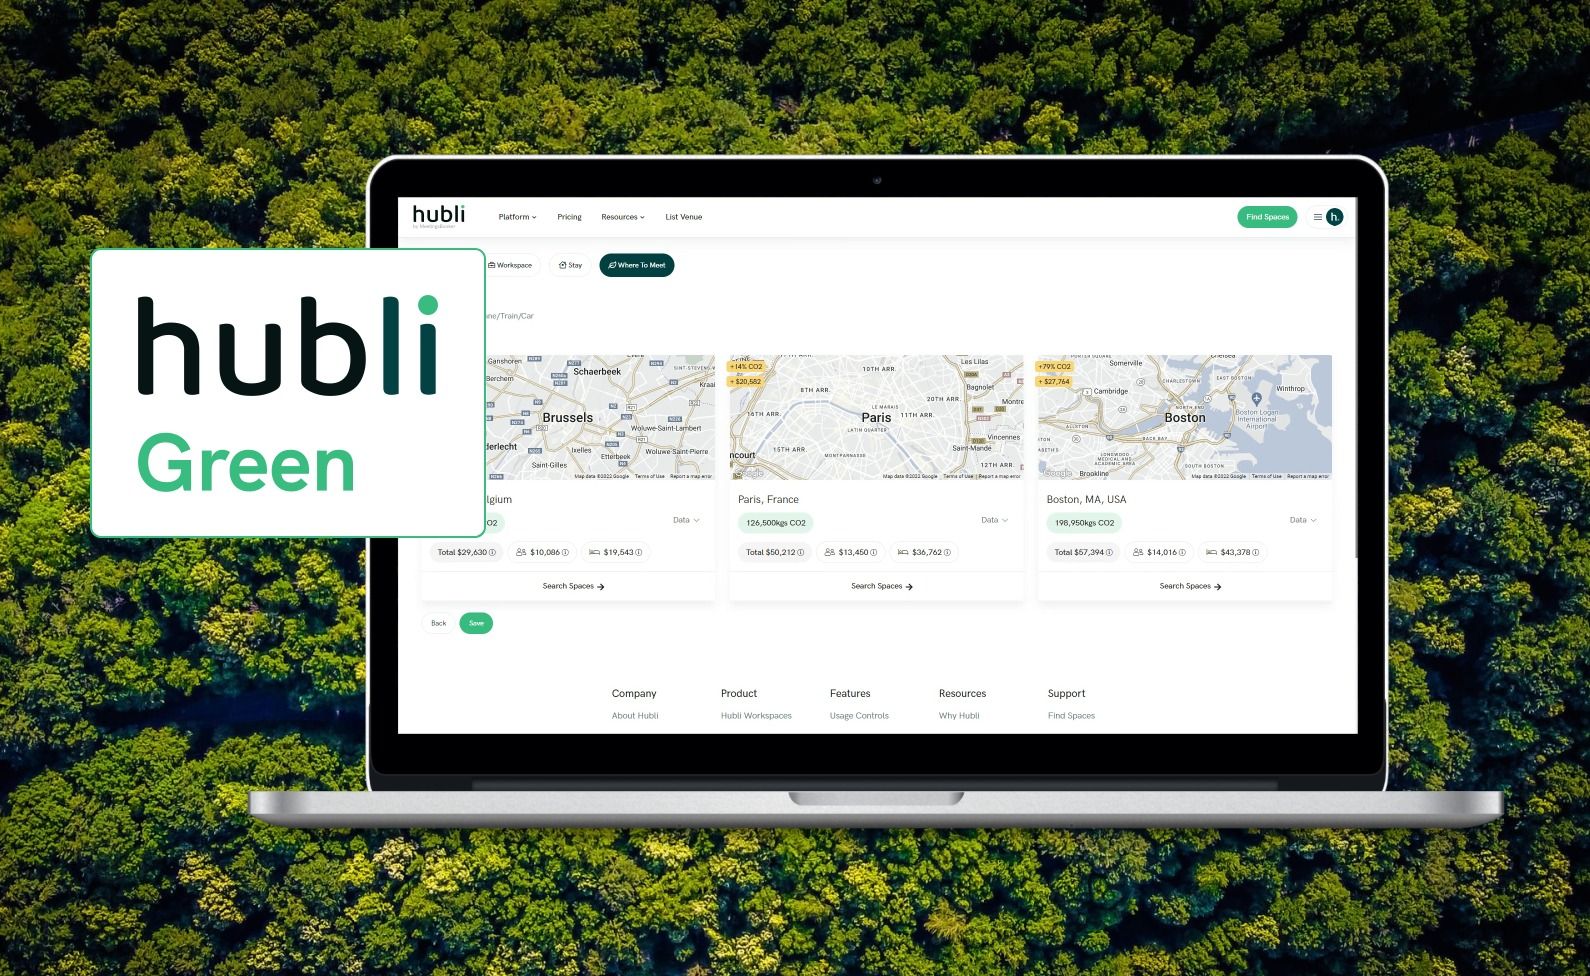 Hubli launches new sustainability product, hubli green